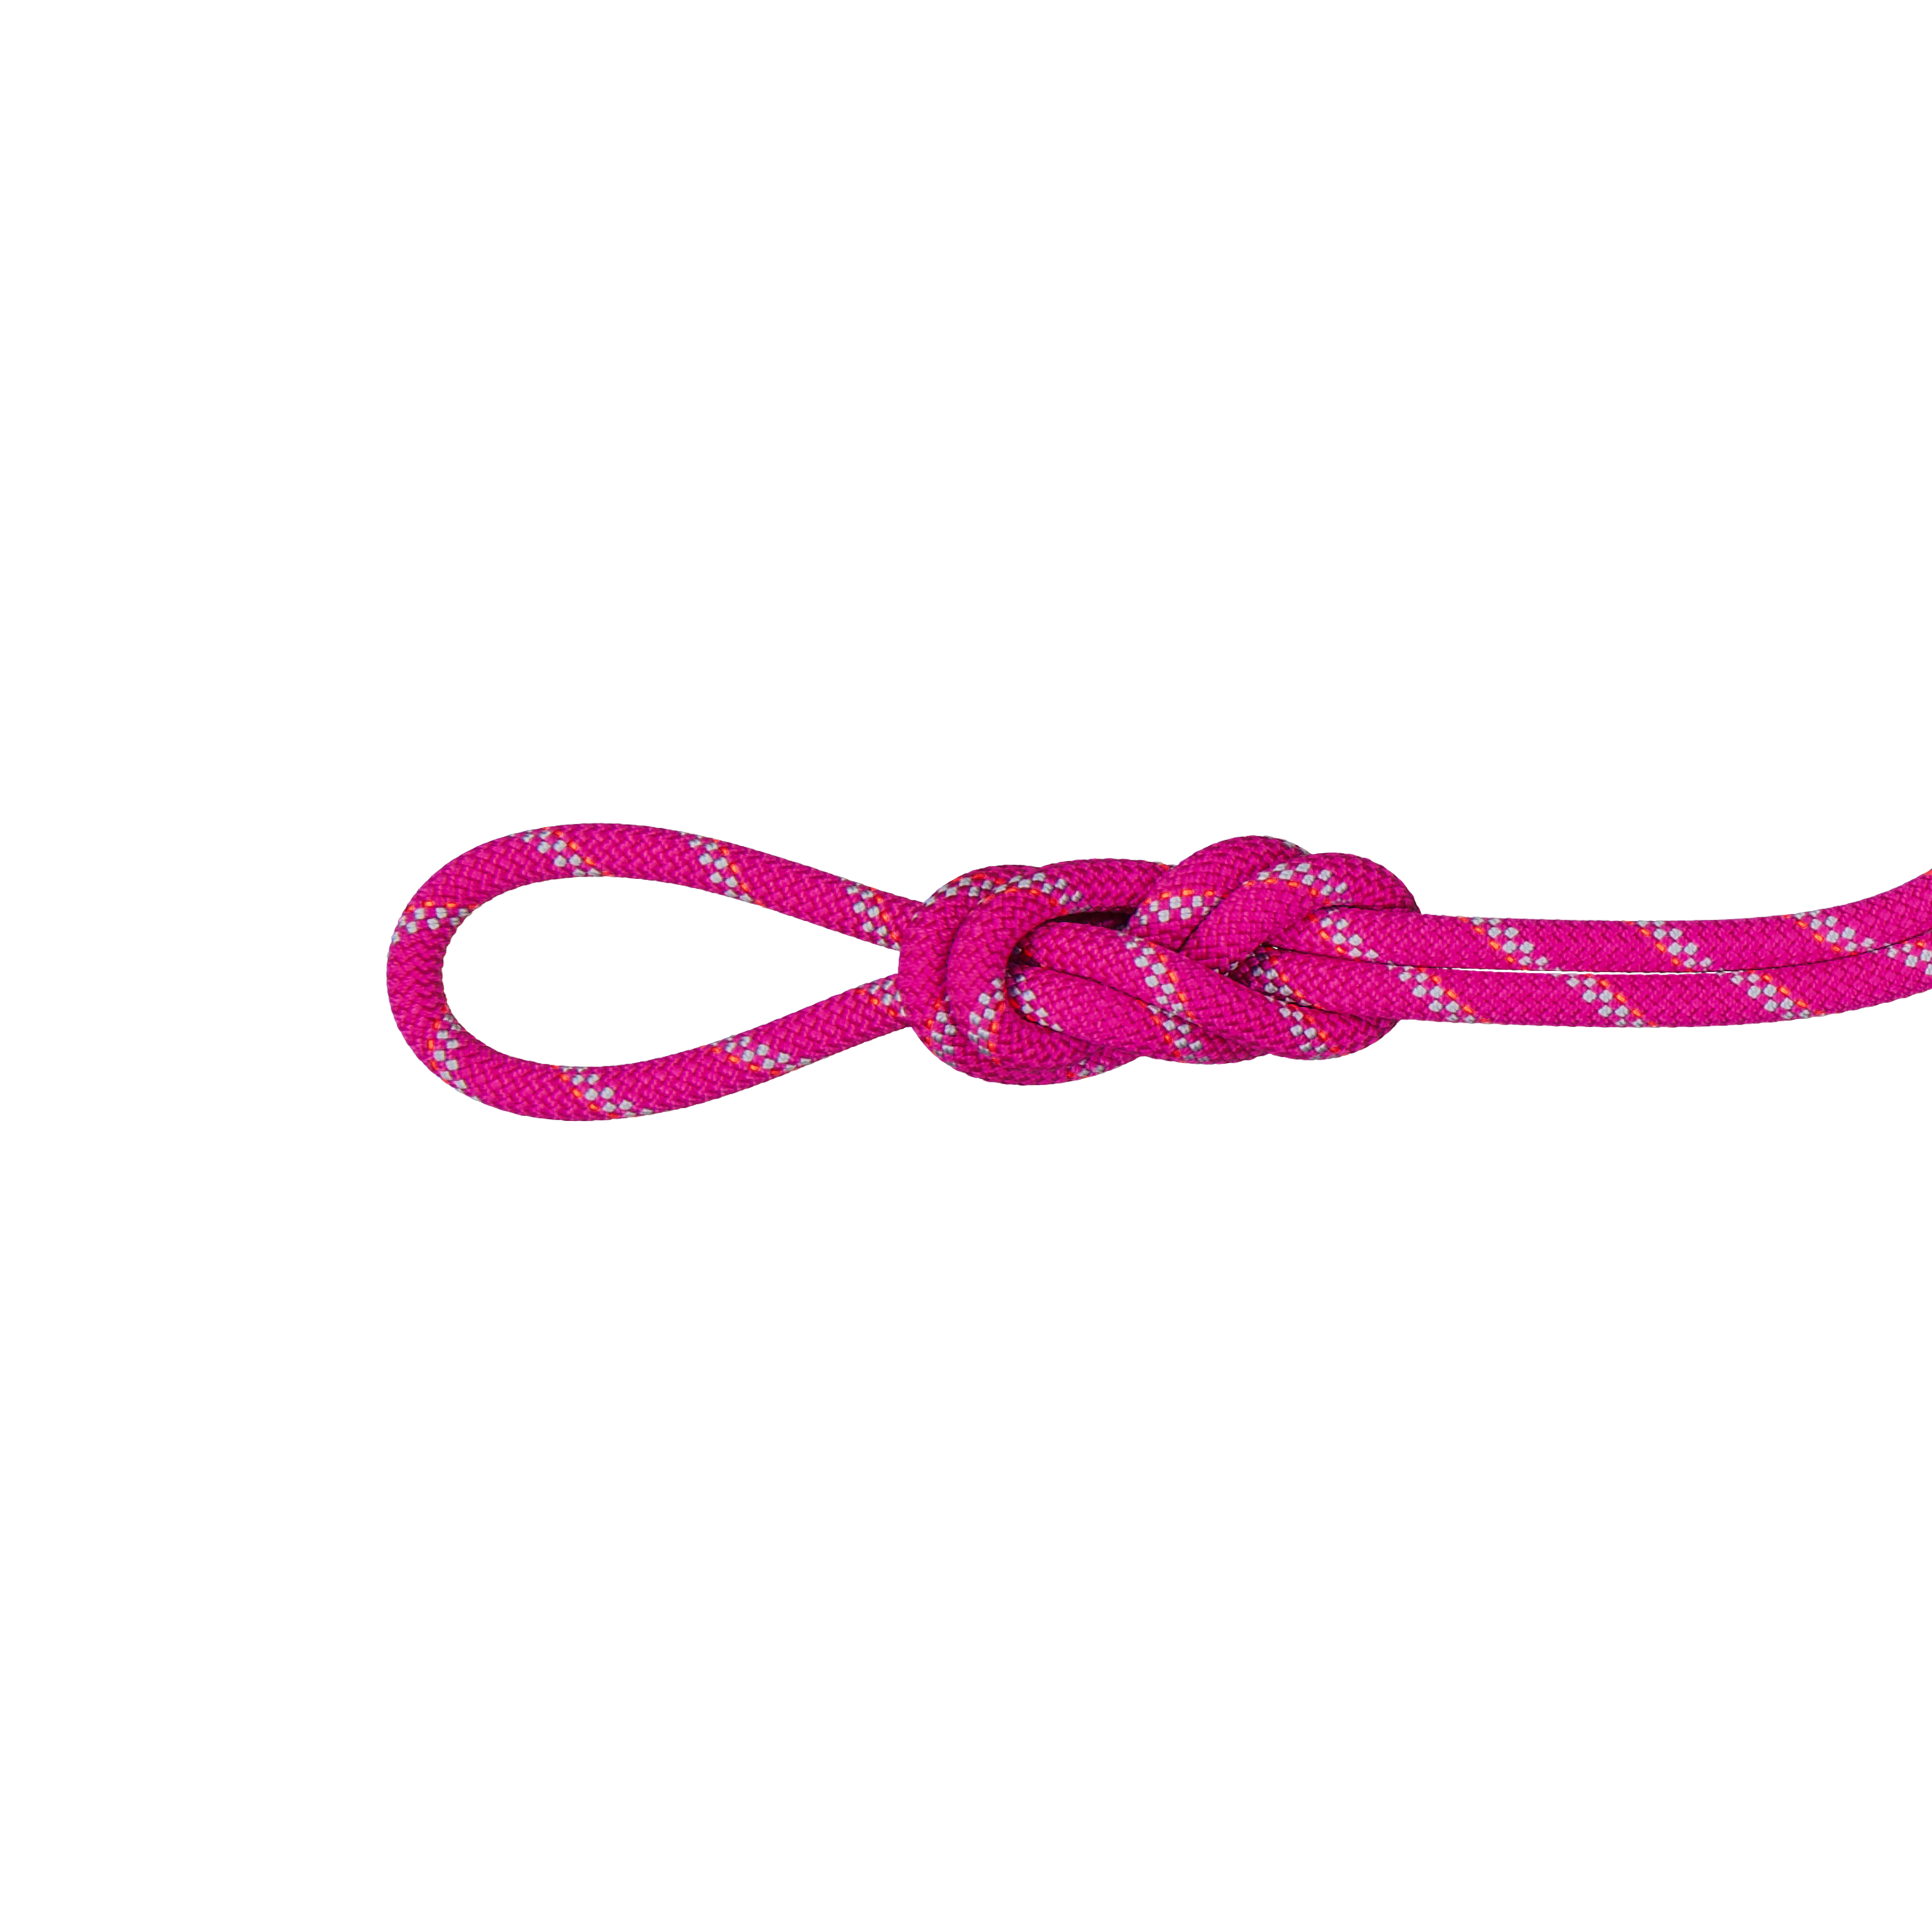 8.0 Alpine Dry Rope - Dry Standard, pink-zen thumbnail